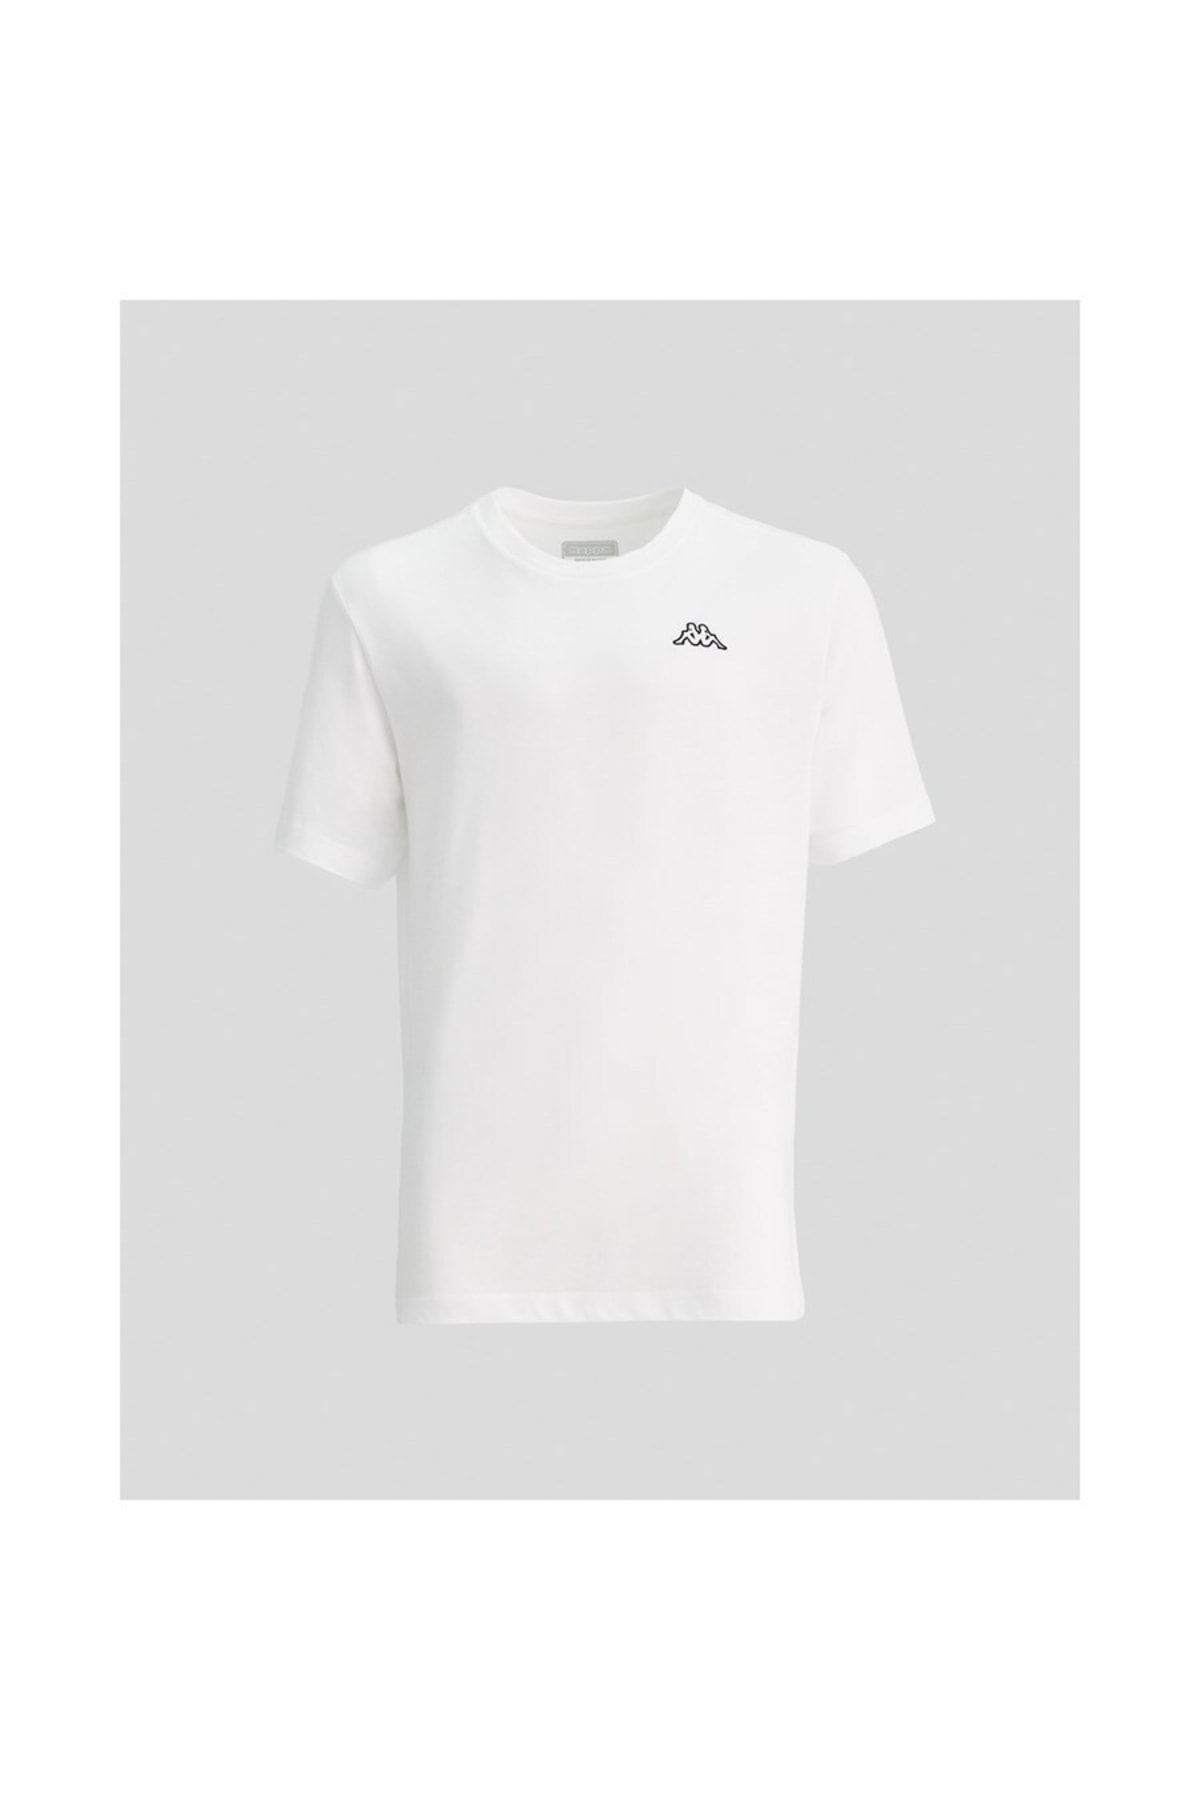 Kappa Logo Cafers Tk Erkek Beyaz Antrenman T-shirt - 331f7bw-001